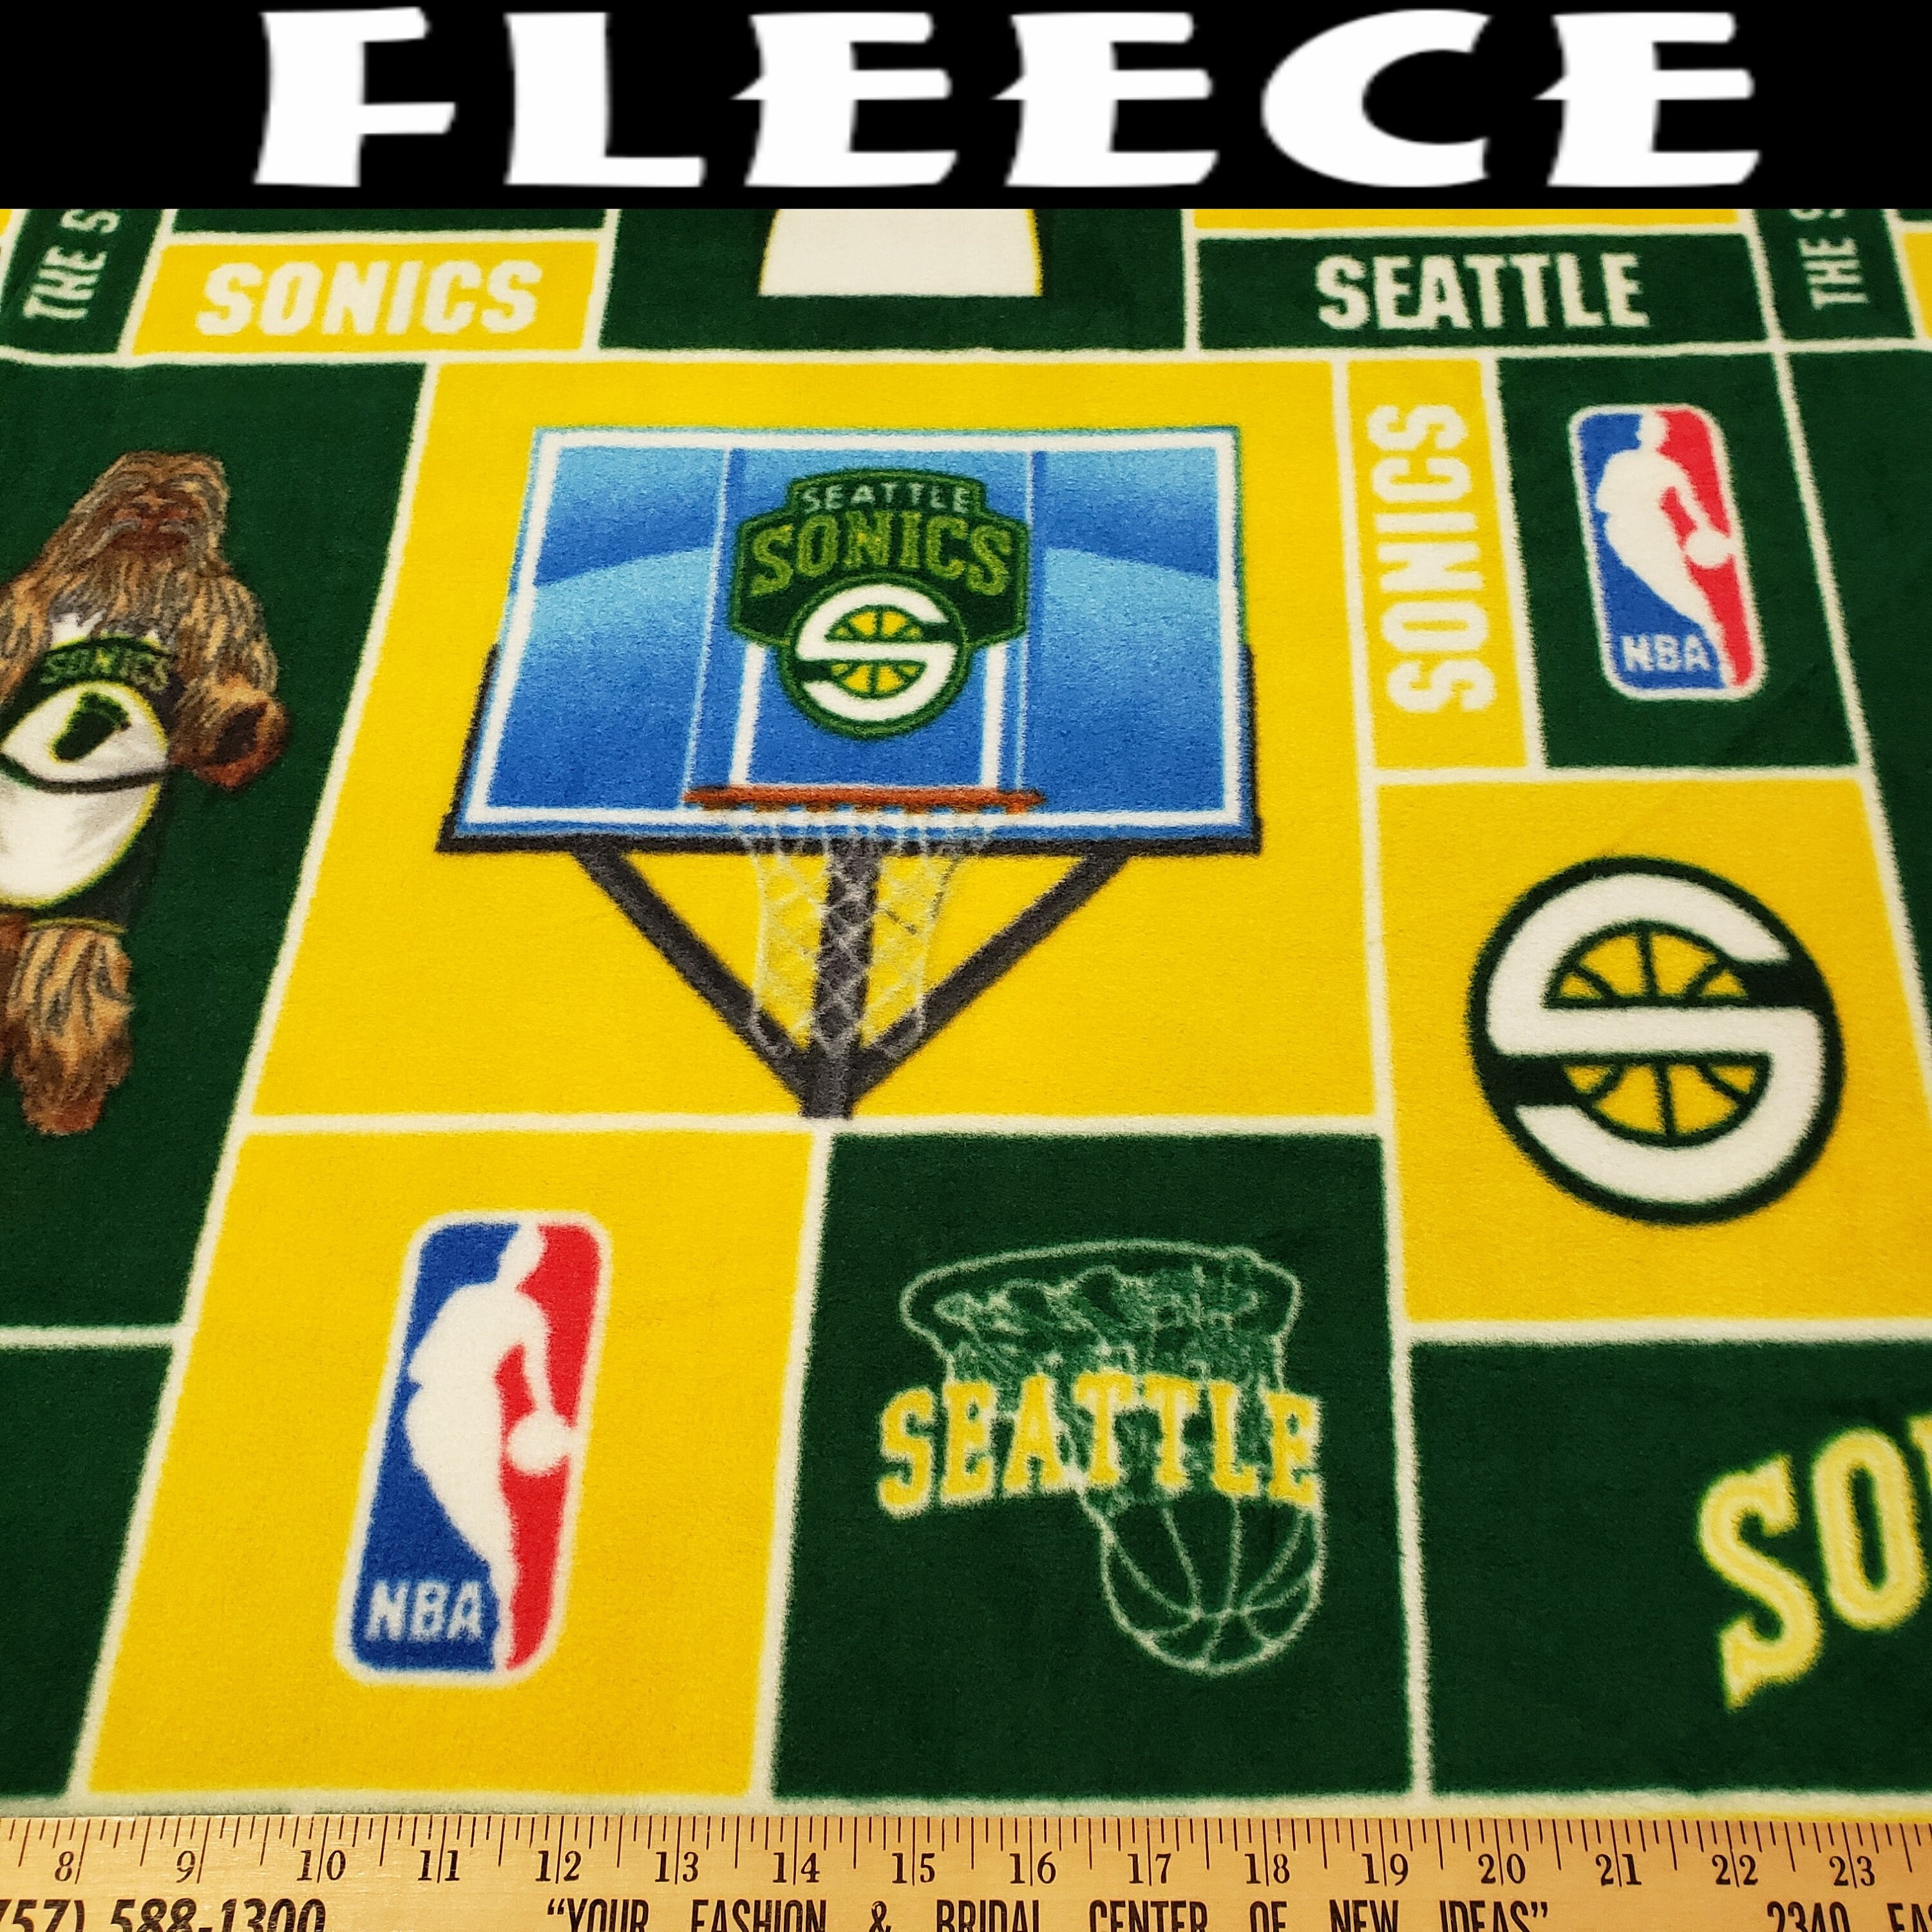 Fleece - Seattle SuperSonics Apparel & Jerseys